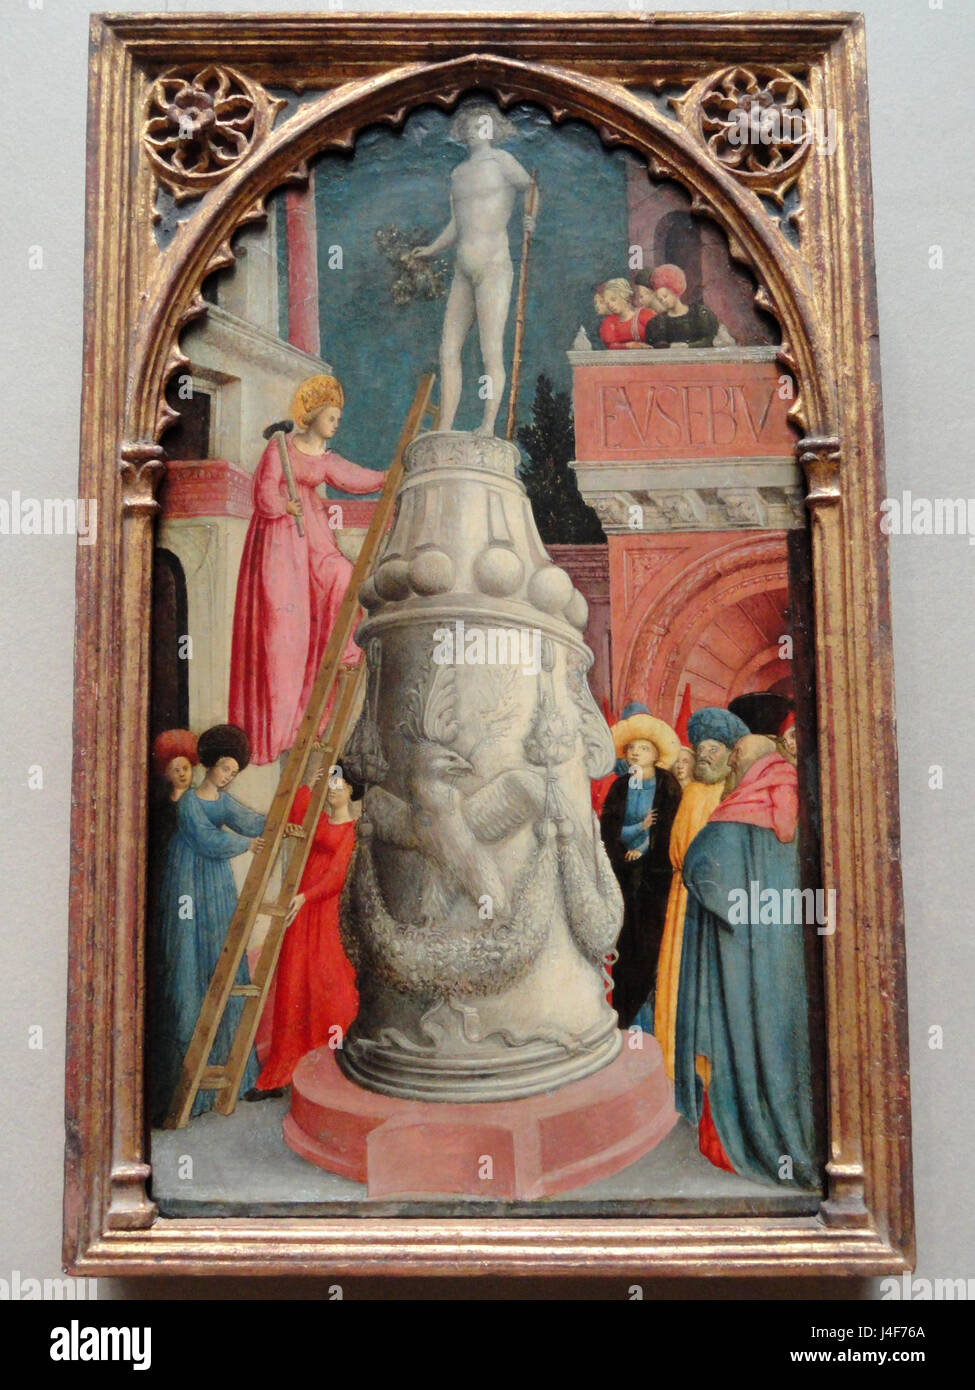 Saint Apollonia Destroys a Pagan Idol, Giovanni d'Alemagna, c. 1442 1445, tempera on panel   National Gallery of Art, Washington   DSC08833 Stock Photo